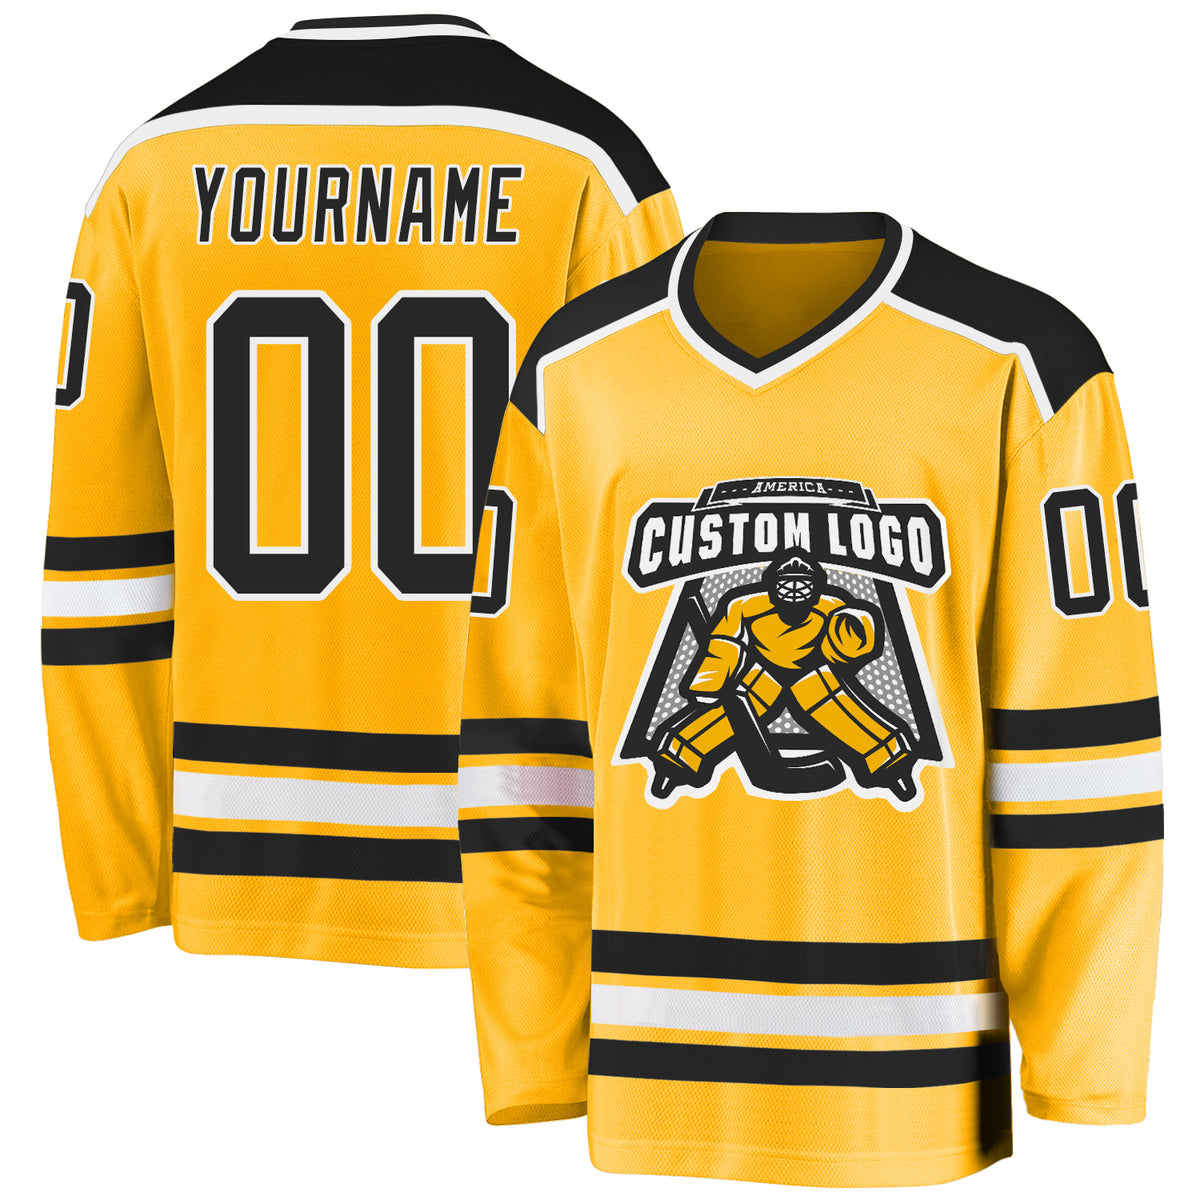 Best Selling Product] Customize Vintage NHL Boston Bruins Hockey